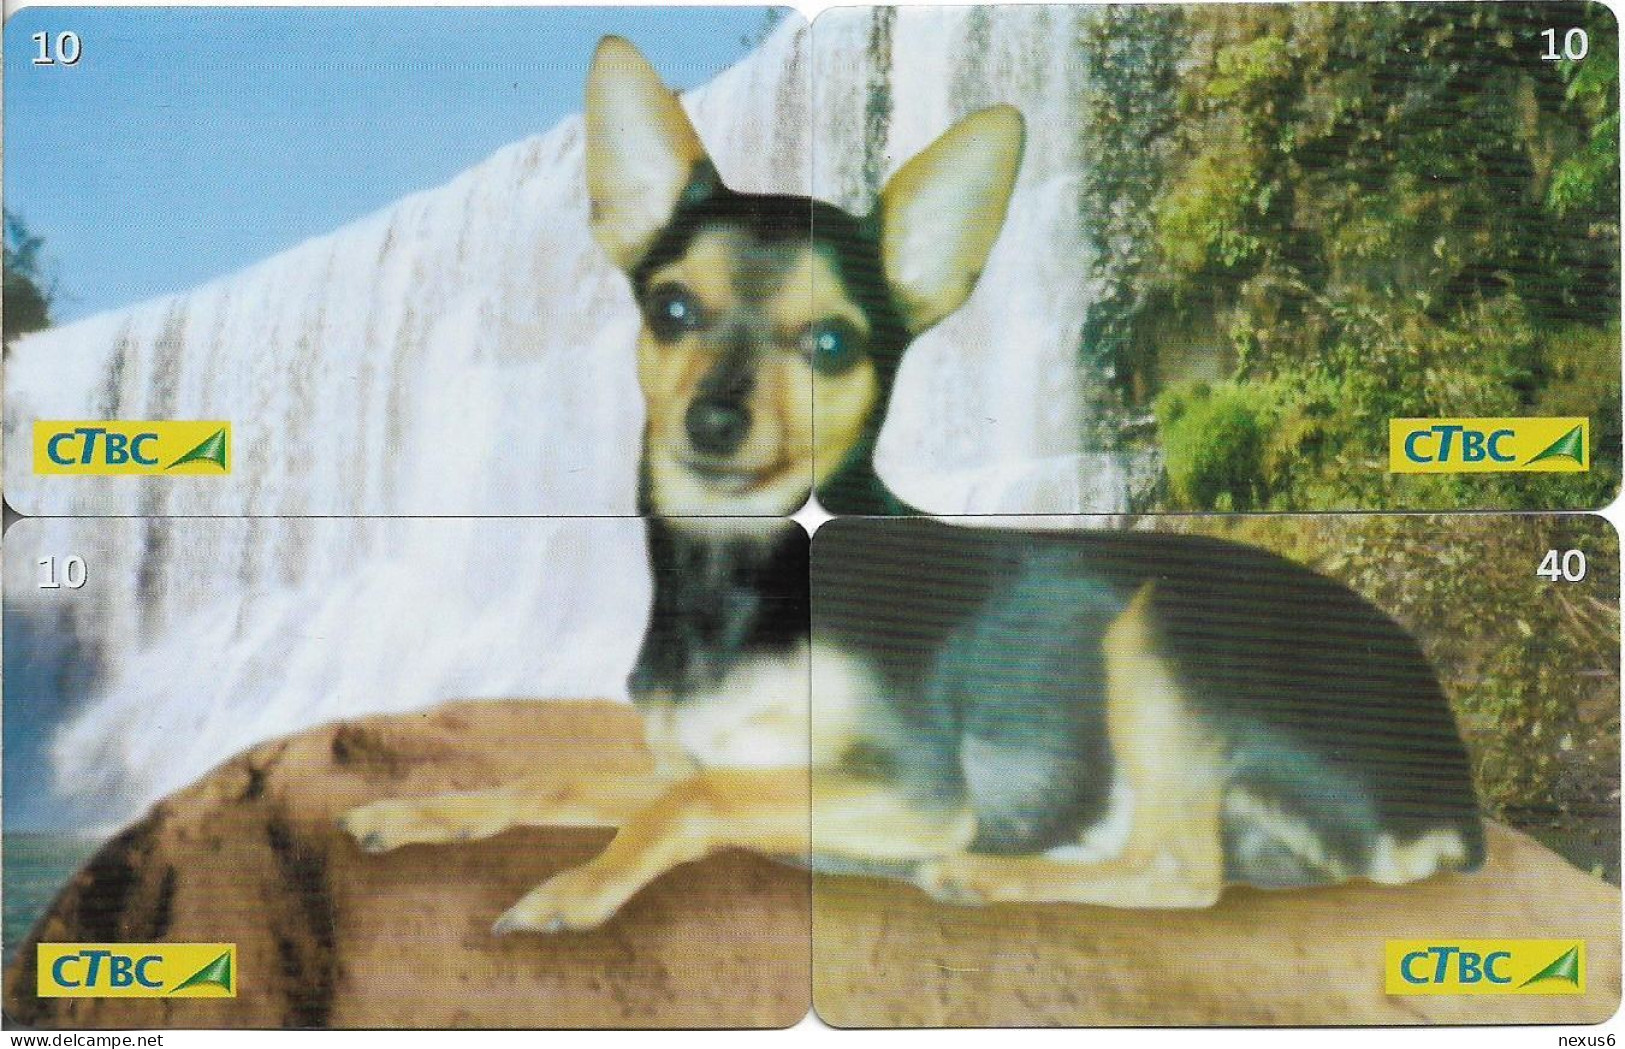 Brazil - CTBC 31 (Inductive) - Pinscher Dog, Puzzle Set Of 4 Cards, 10.2001, 10U, 10.000ex, Used - Brésil